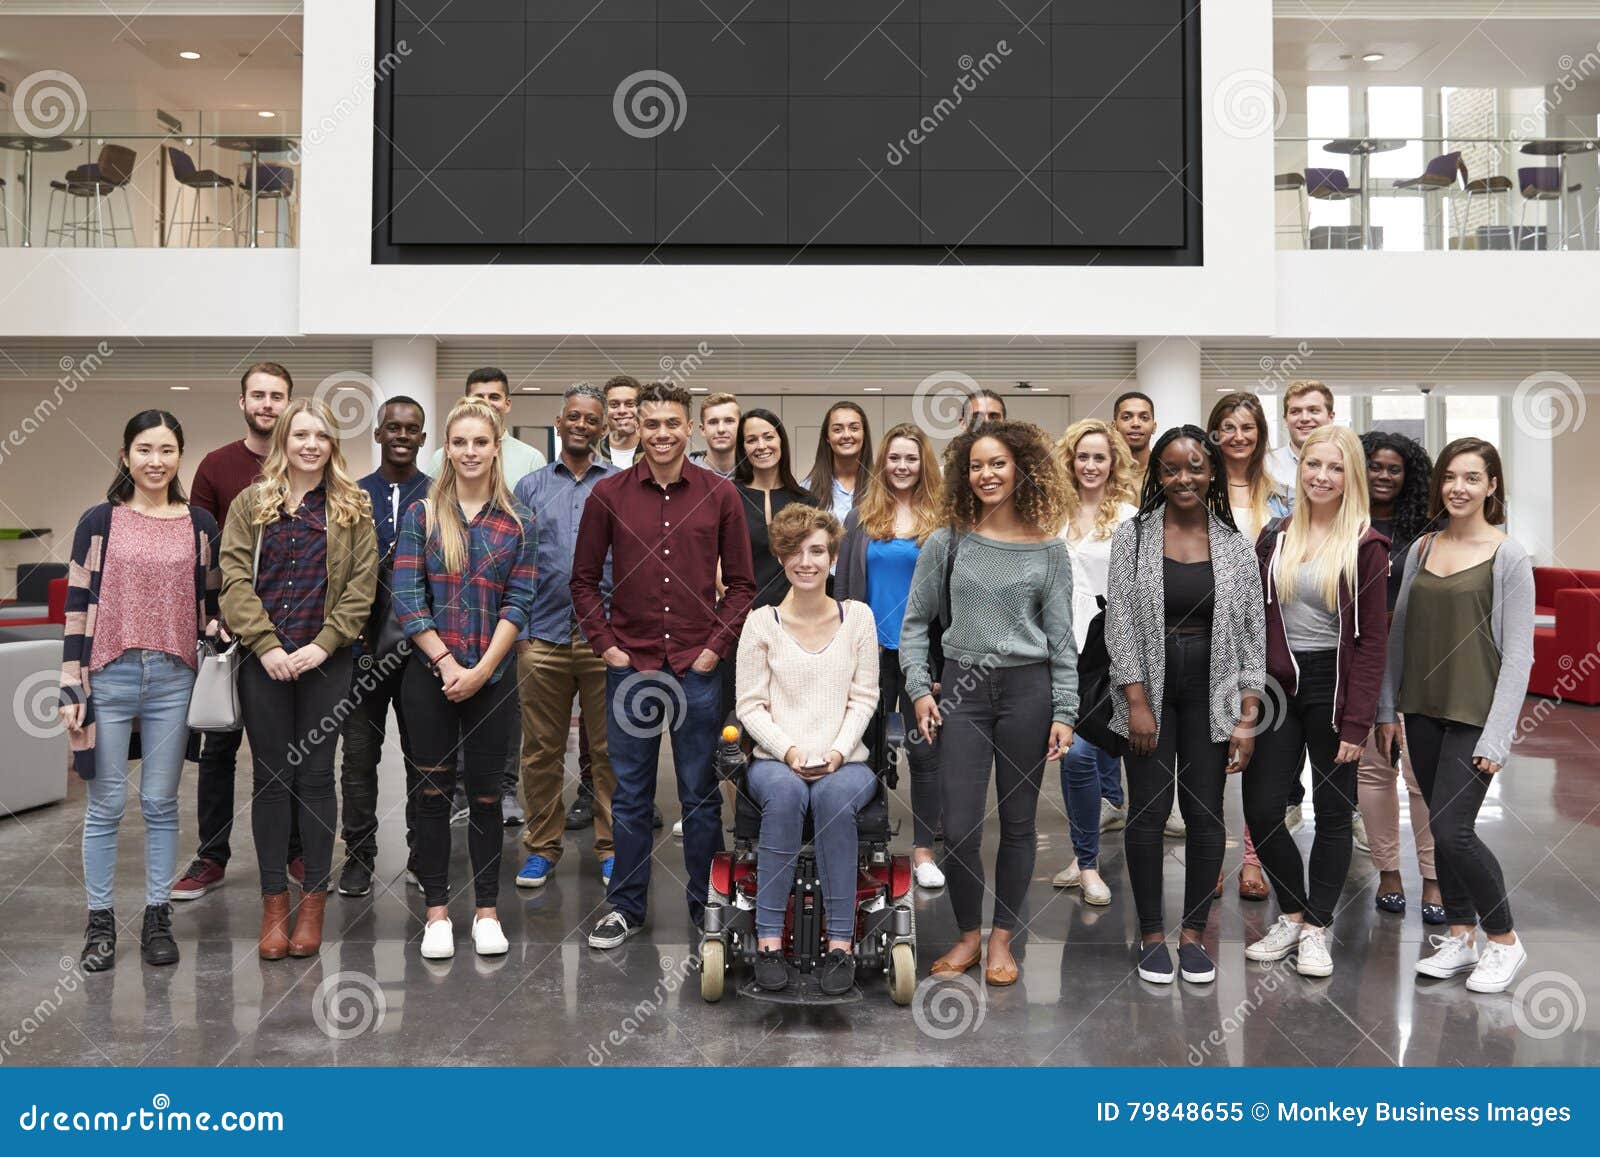 student group standing in atrium under a big av screen